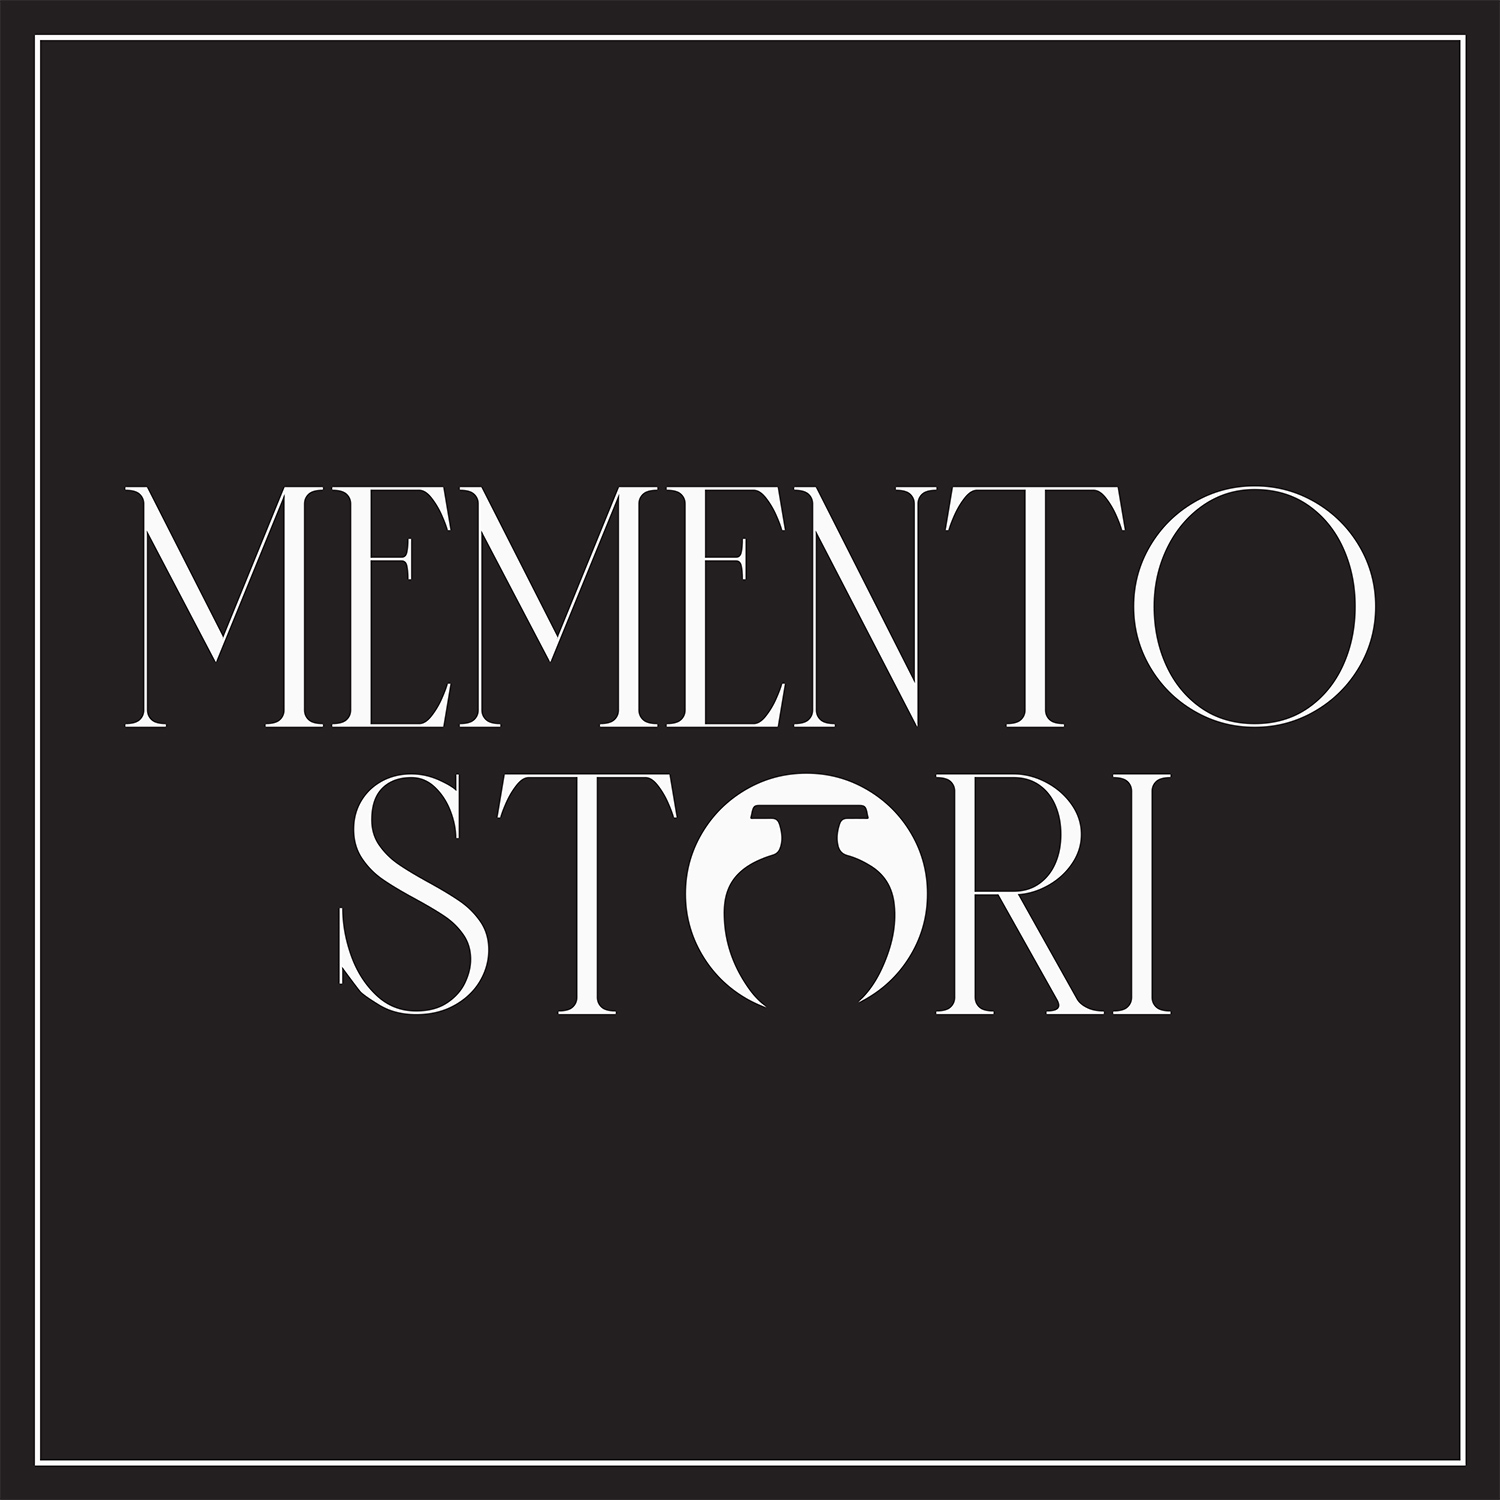 Introducing Memento Stori